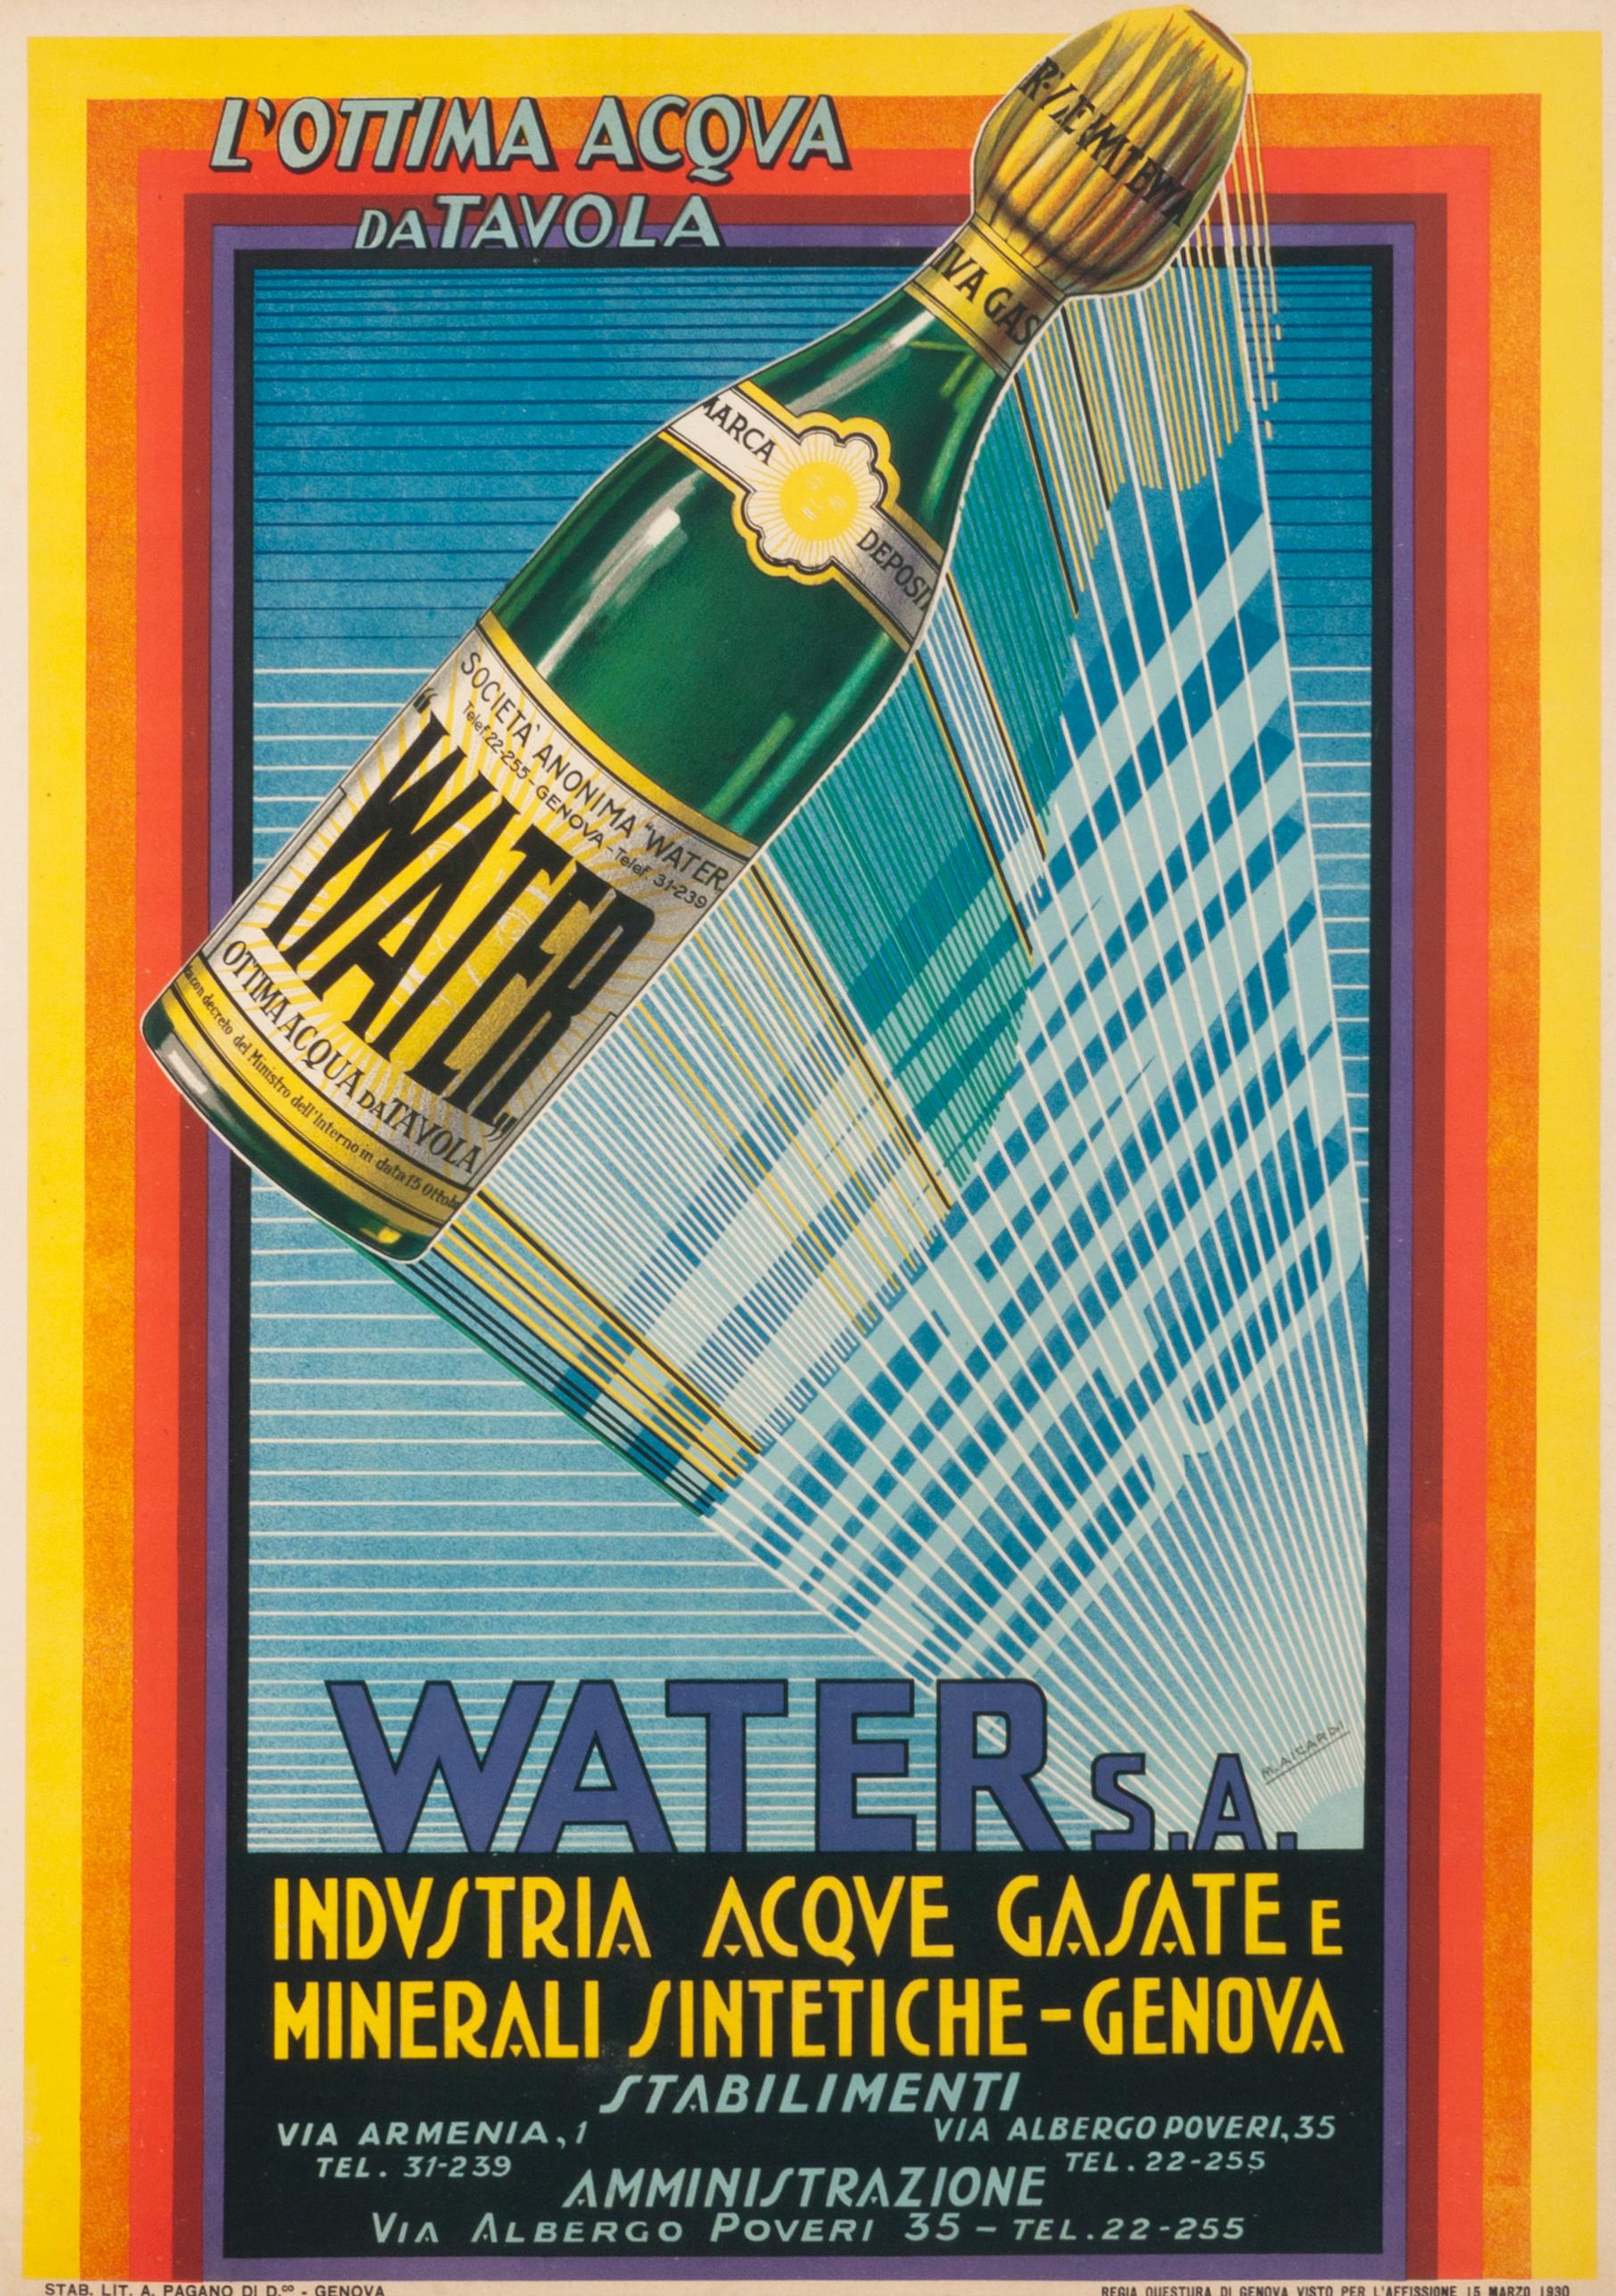 Giorgio Matteo Aicardi Still-Life Print - "Water S.A." Original Vintage Italian 1930s Art Deco/Futurist Beverage Poster